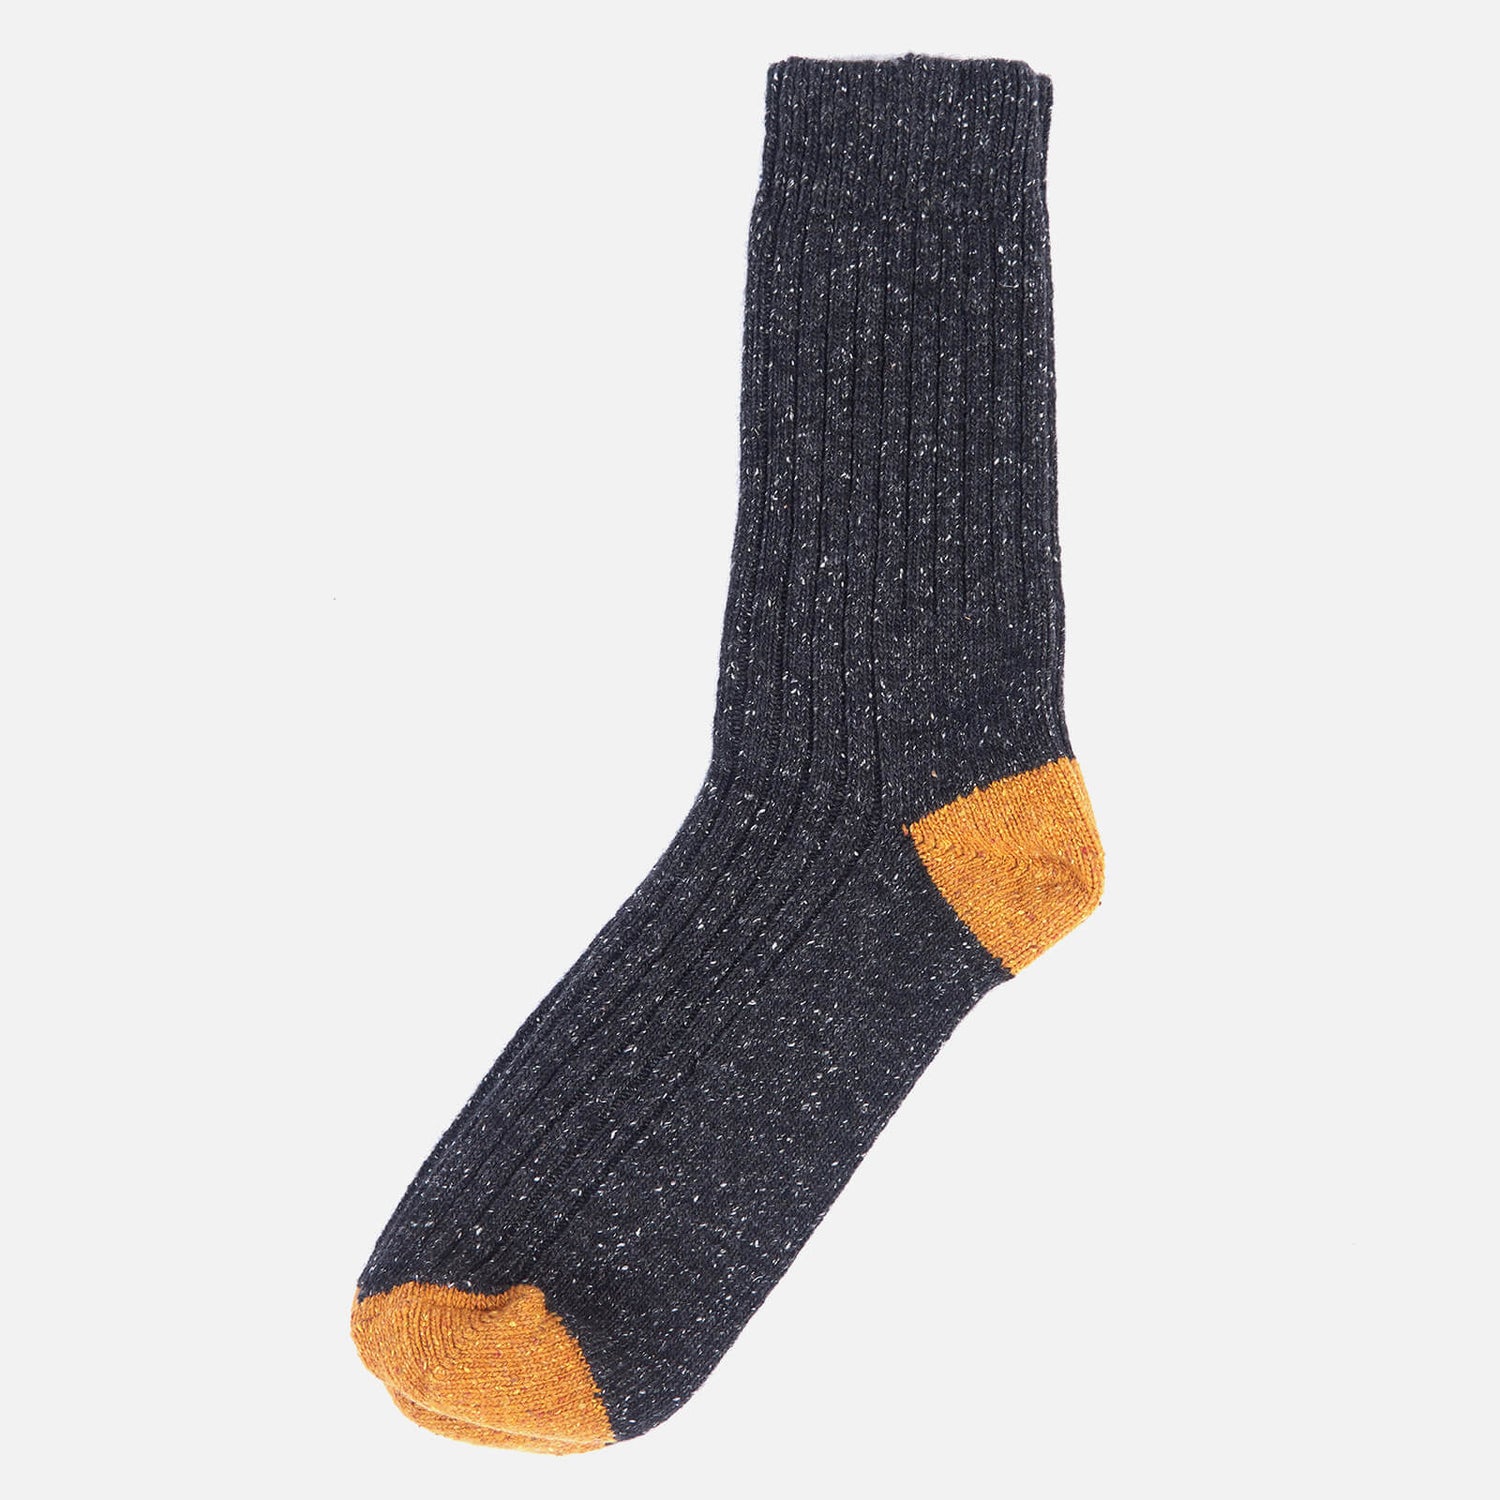 Barbour Heritage Men's Houghton Socks - Charcoal